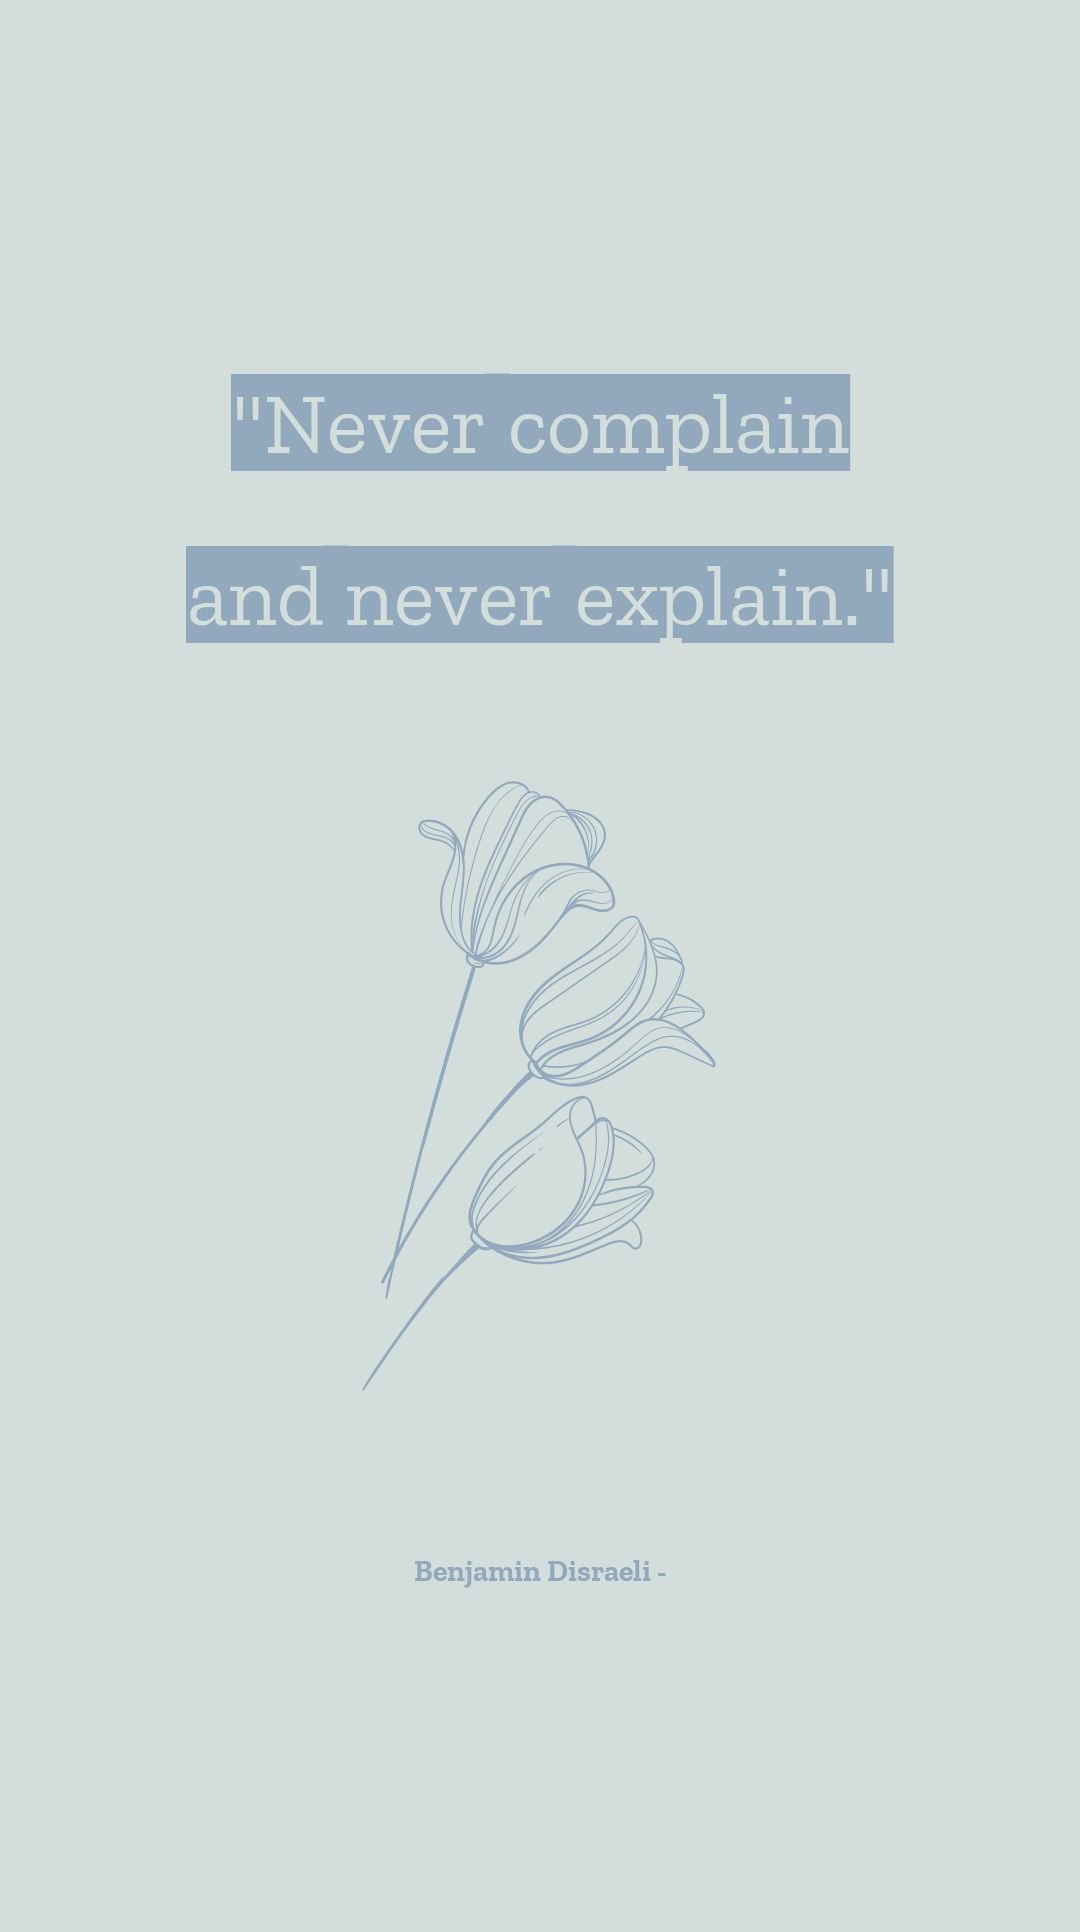 Benjamin Disraeli - Never complain and never explain.